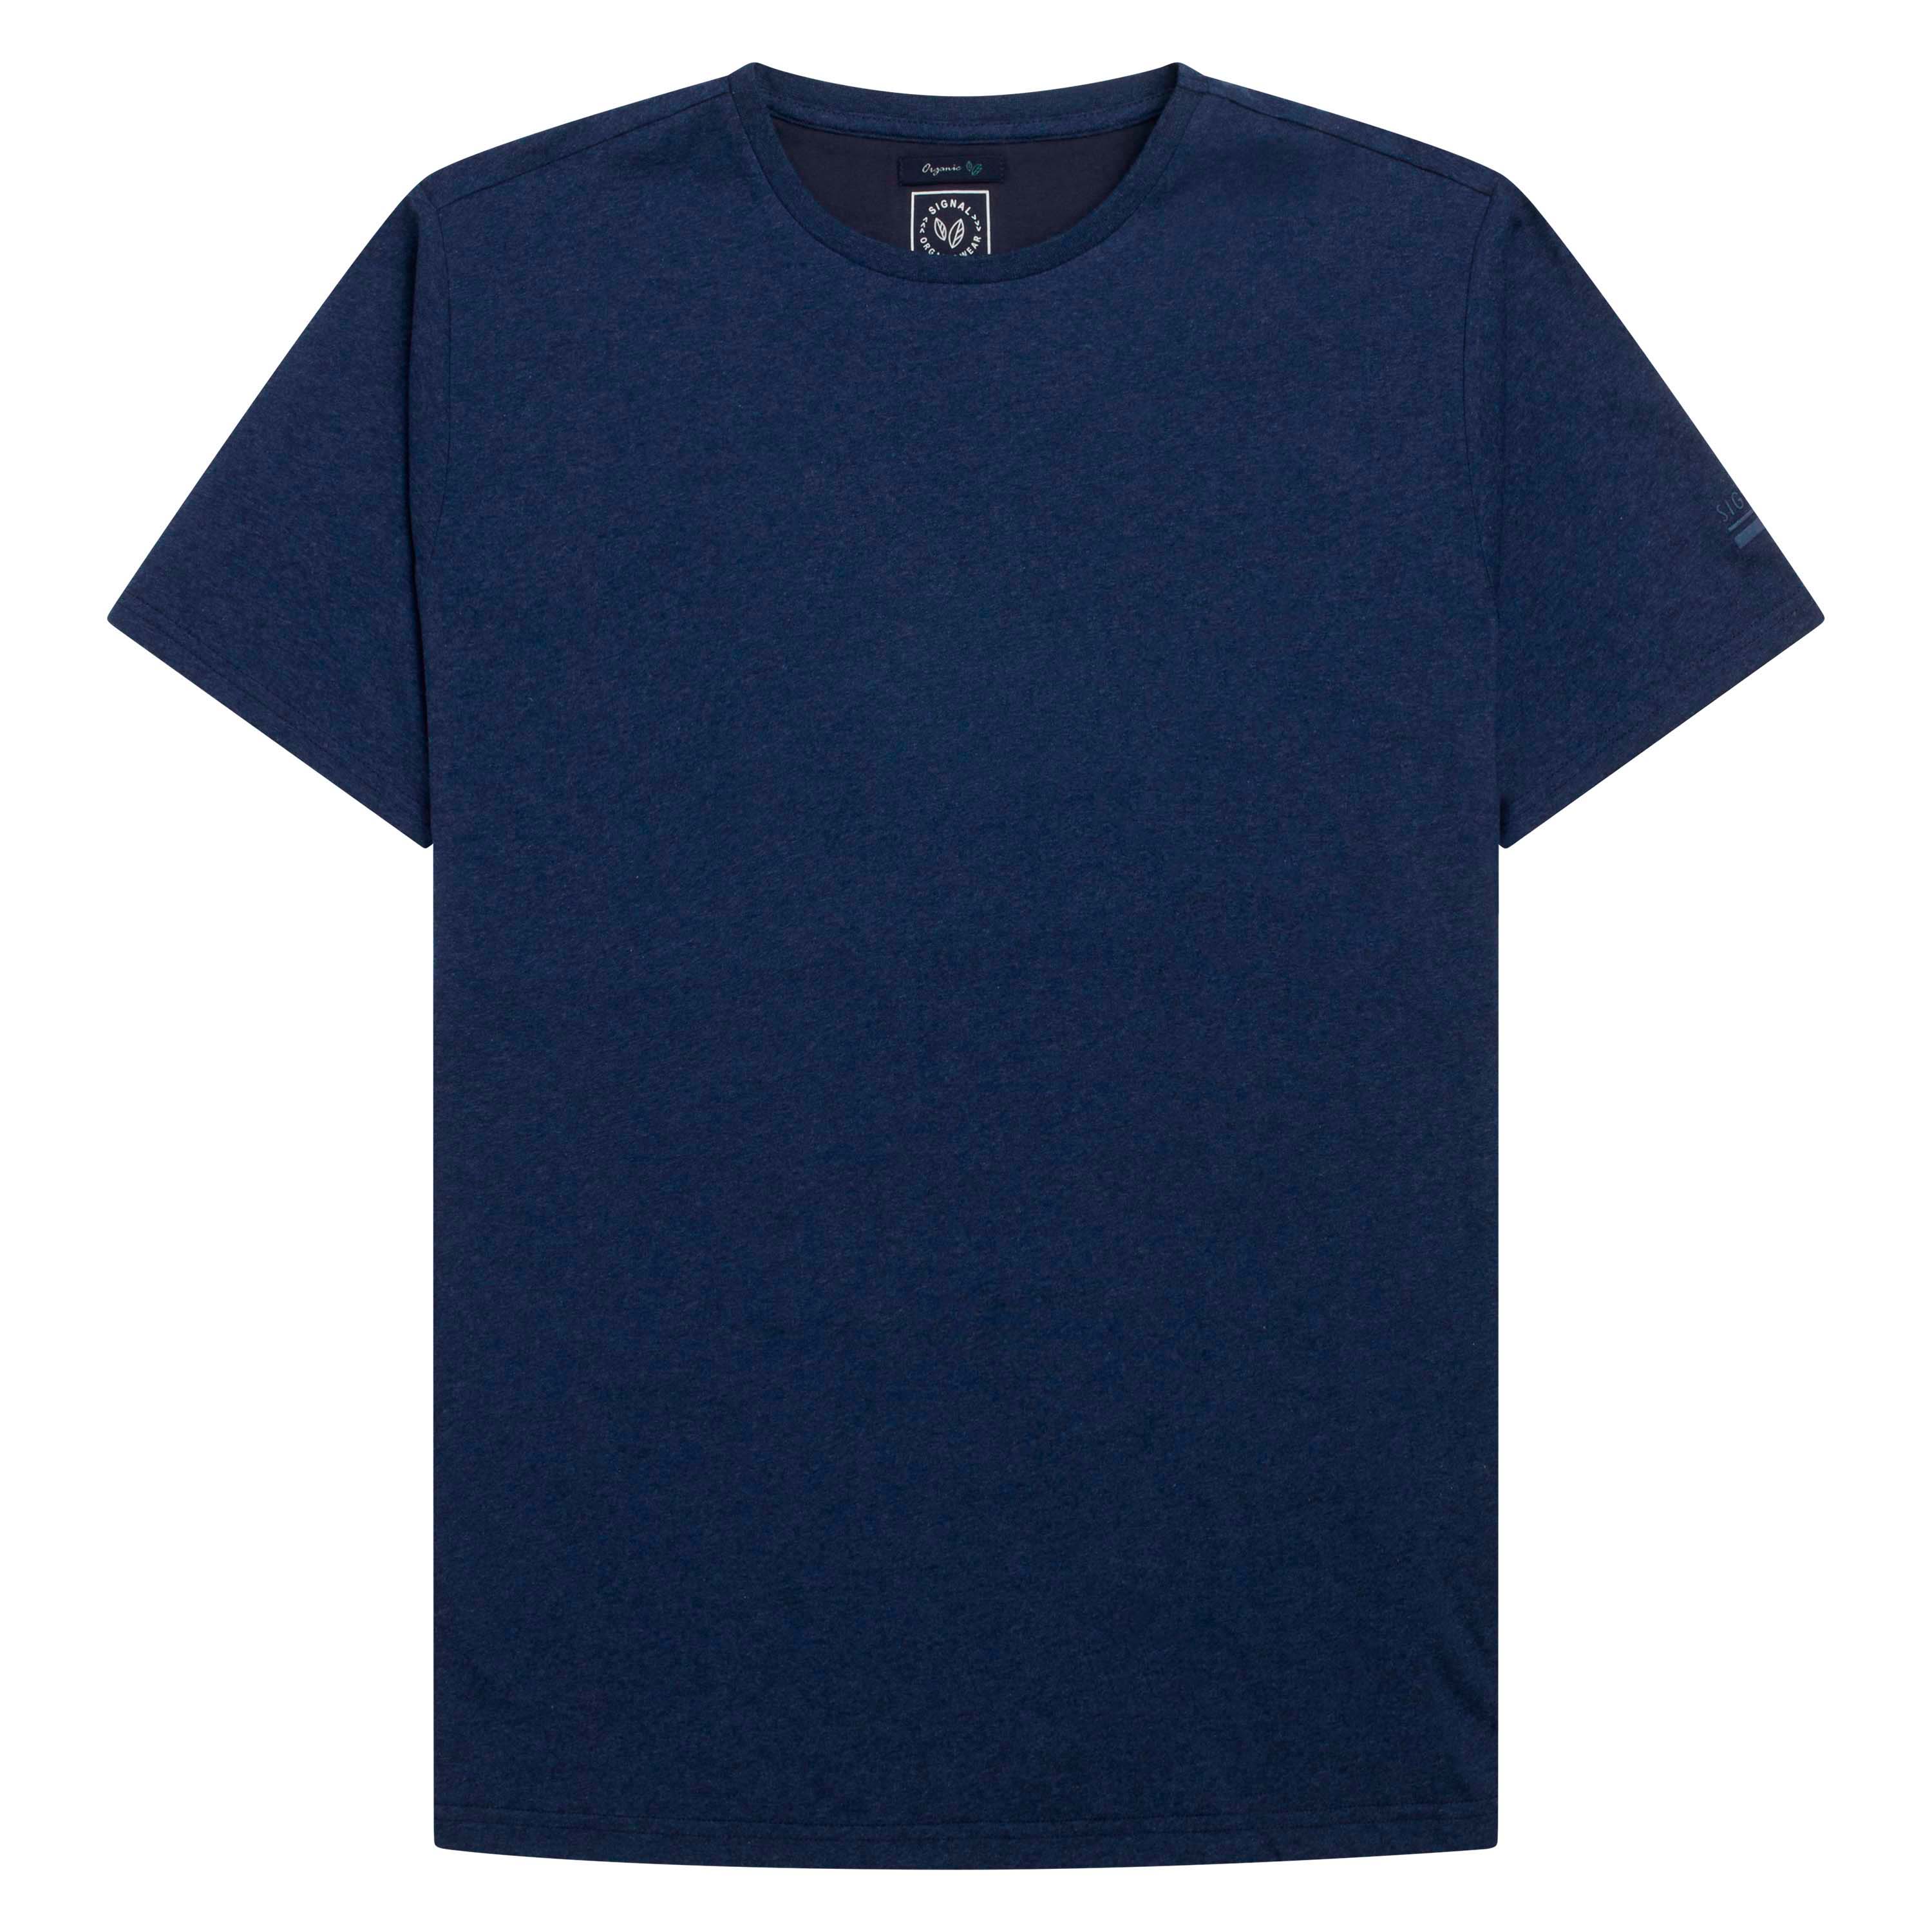  Storm T-shirt, Marine Blue Melange, S